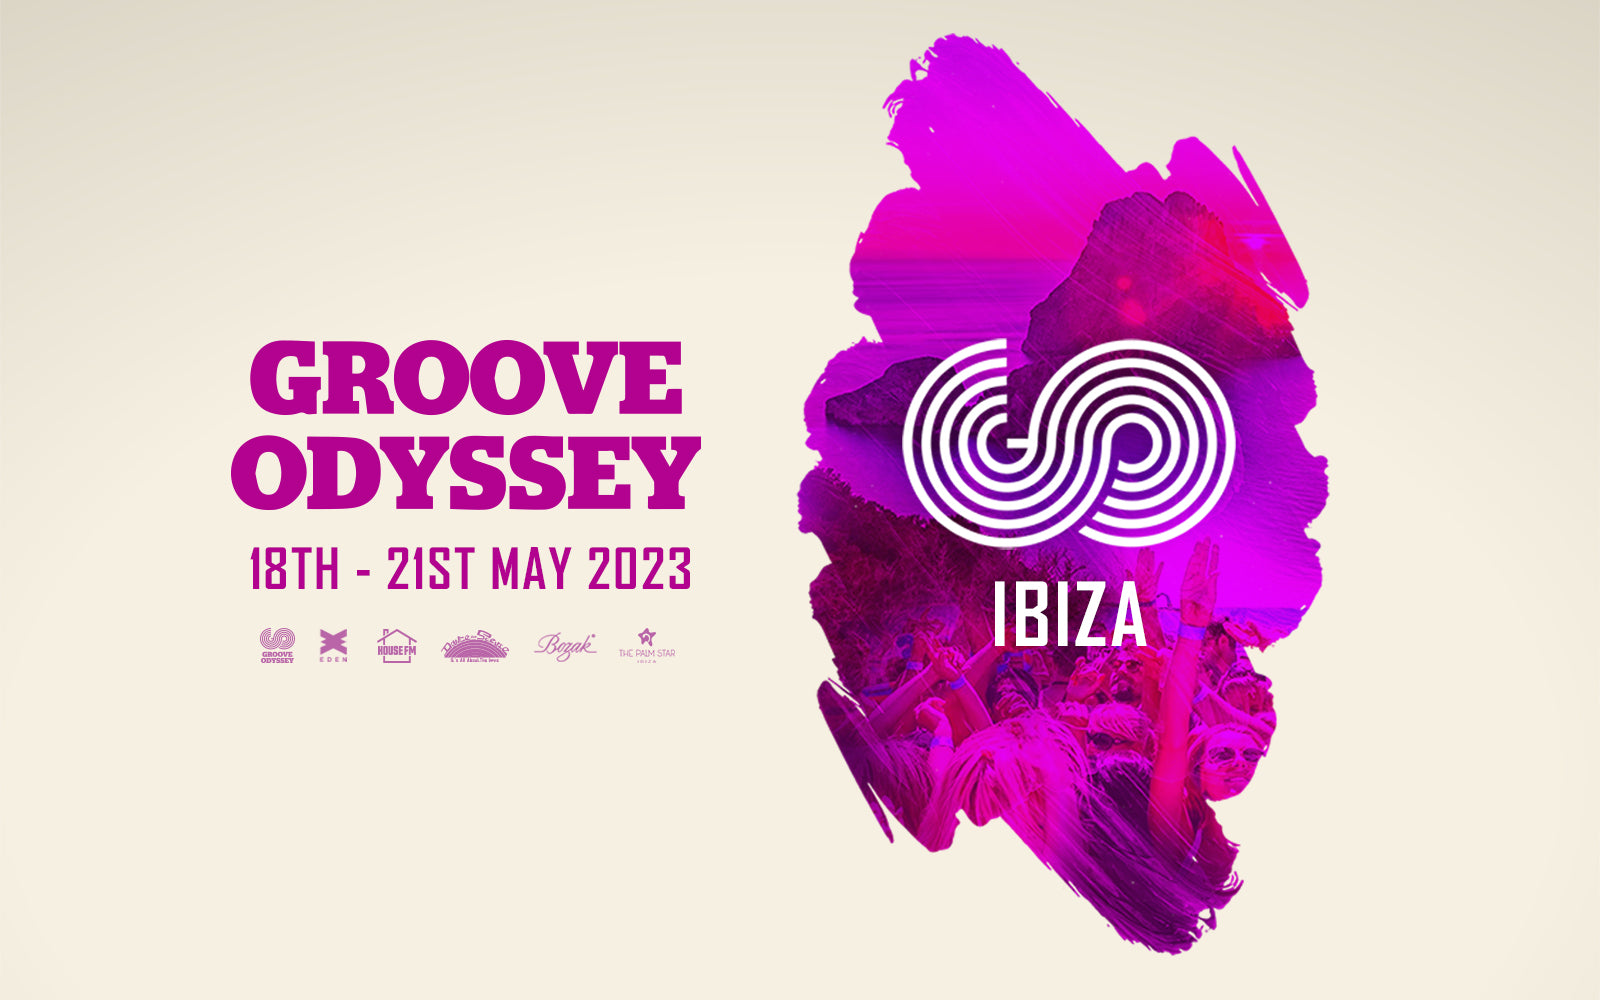 House music ibiza. Ибица 2023. Ибица Odyssey. Odyssey Groove Jinx mp3. Roger Jordan Ibiza sessions.